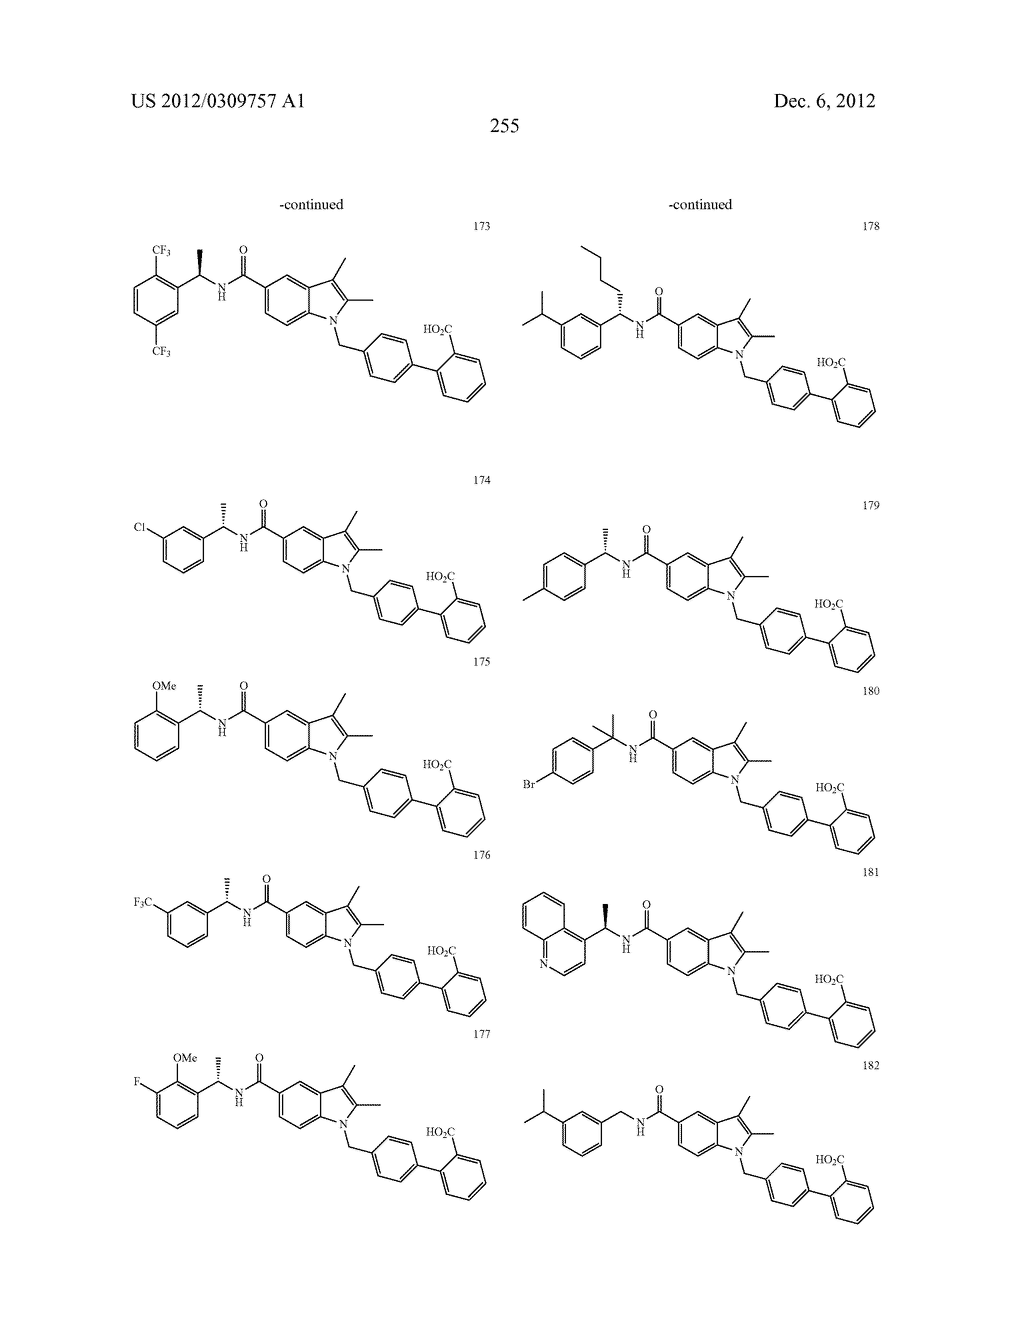 N-BIPHENYLMETHYLINDOLE MODULATORS OF PPARG - diagram, schematic, and image 270